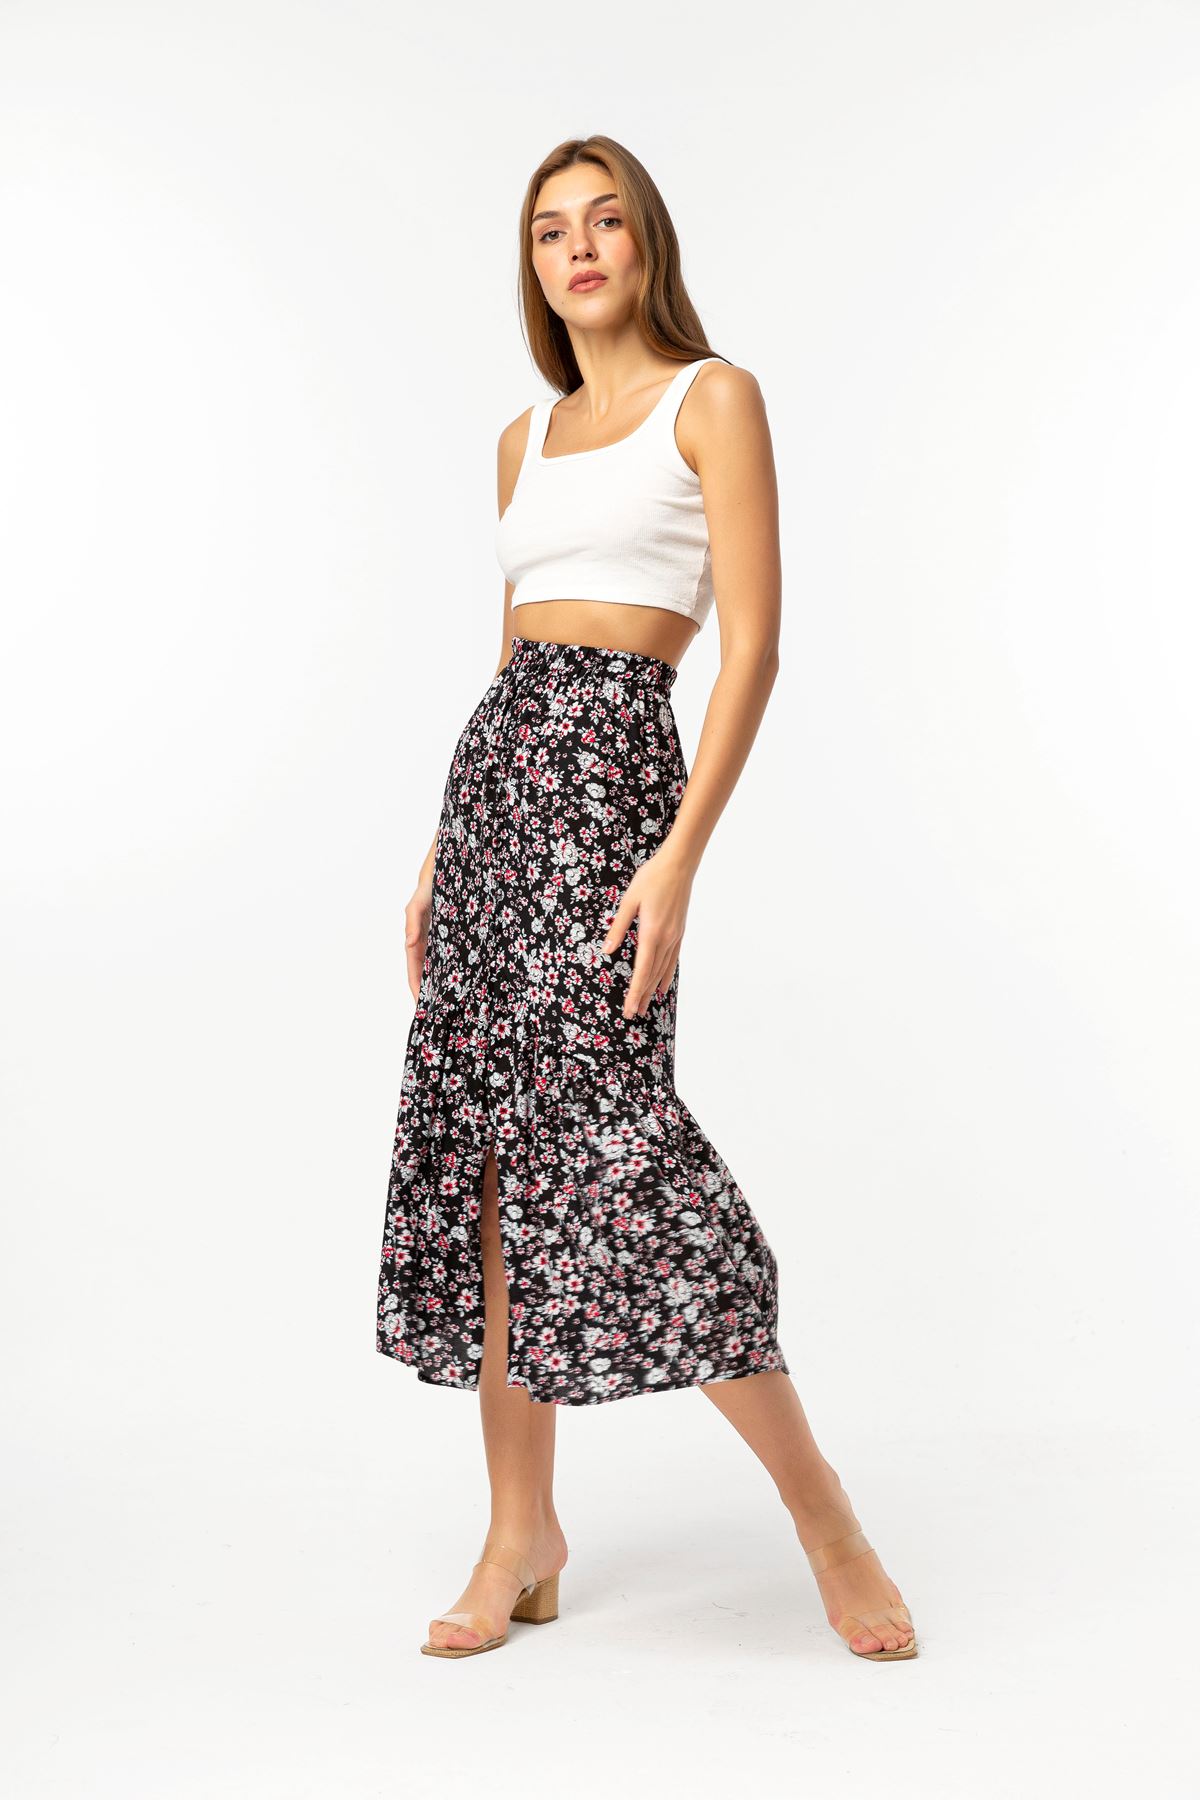 Viscose Fabric Long Comfy Fit Floral Print Women'S Skirt - Black